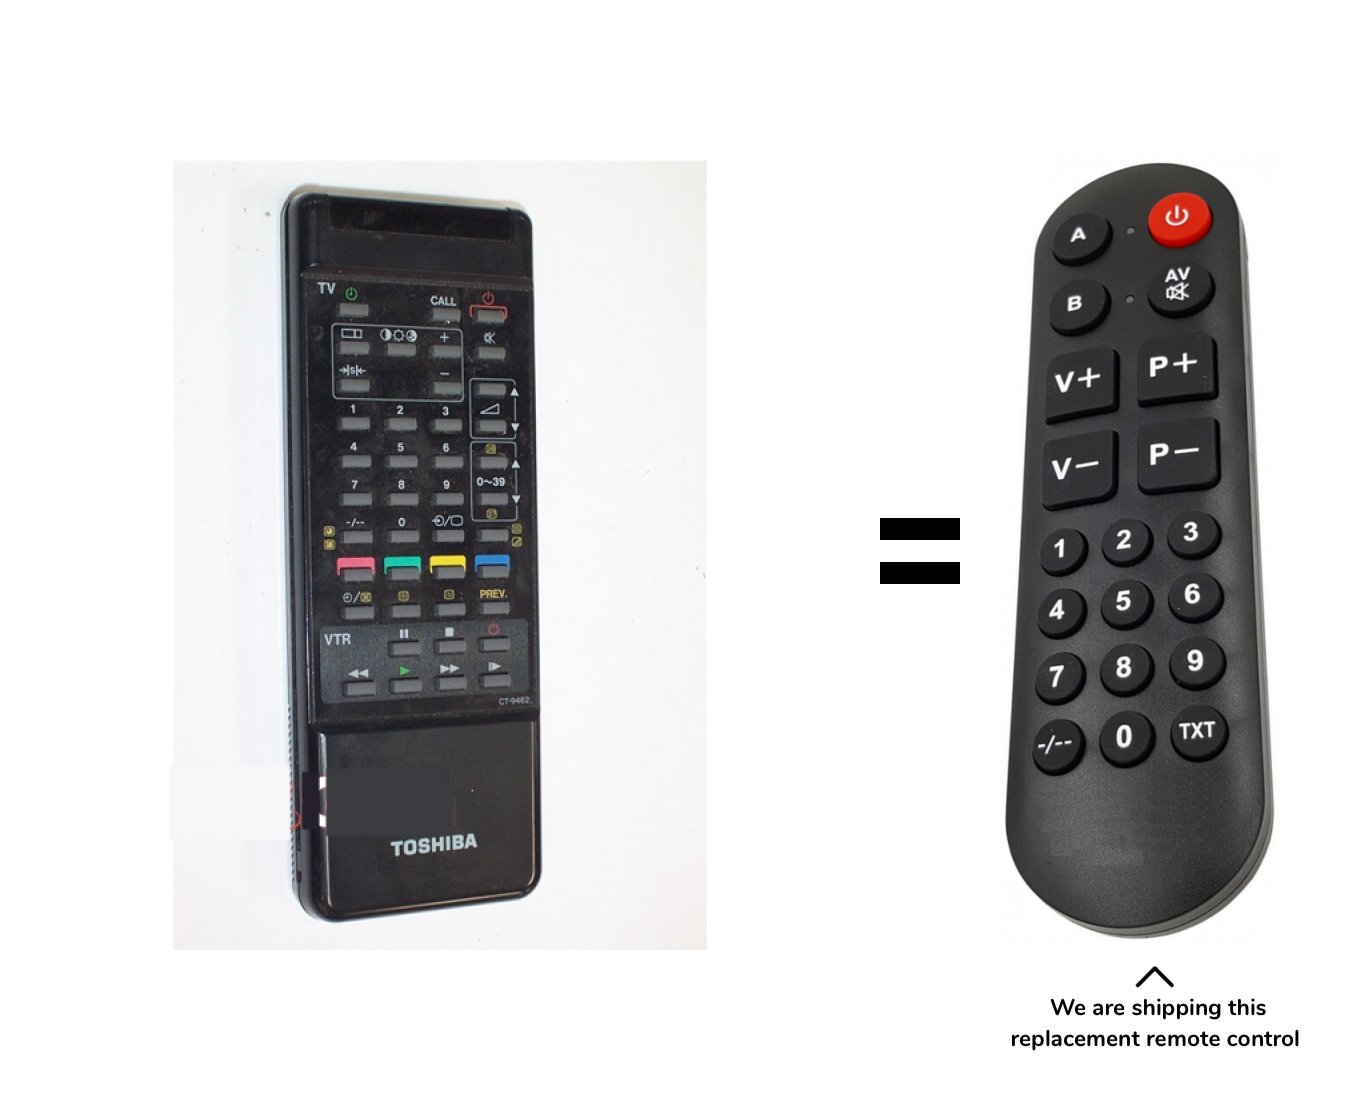 Toshiba 2500TT remote control for seniors